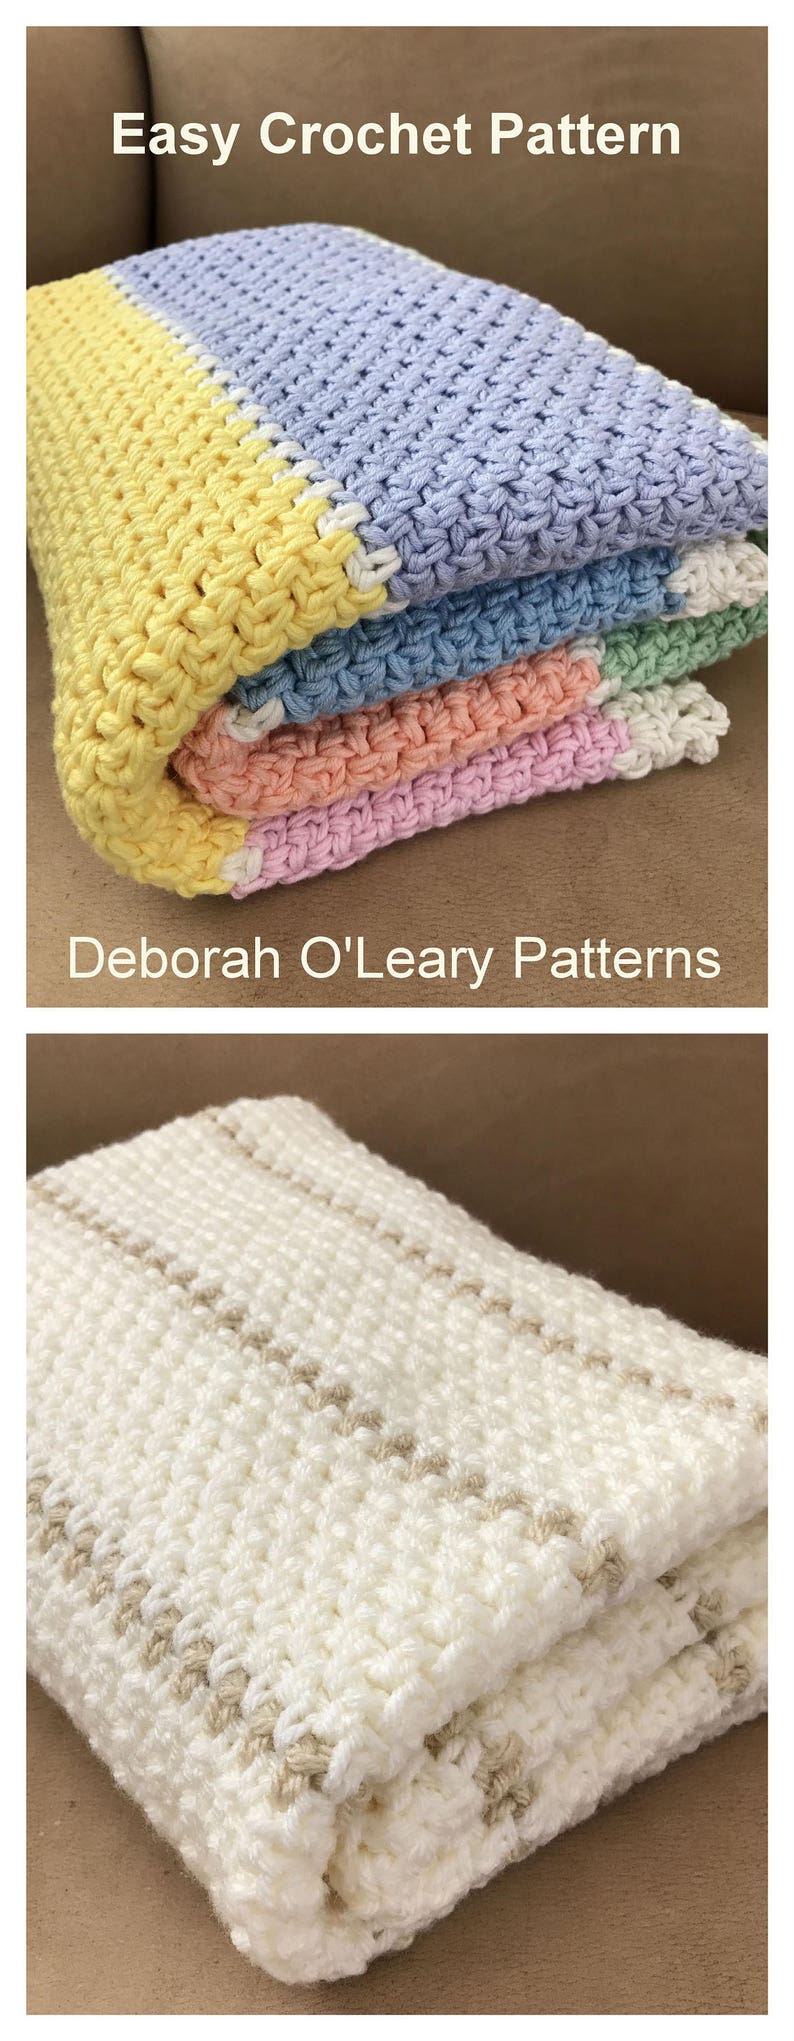 Crochet Baby Blanket Pattern Chunky Crochet Blanket Easy Pattern by Deborah O'Leary Patterns English Only image 5